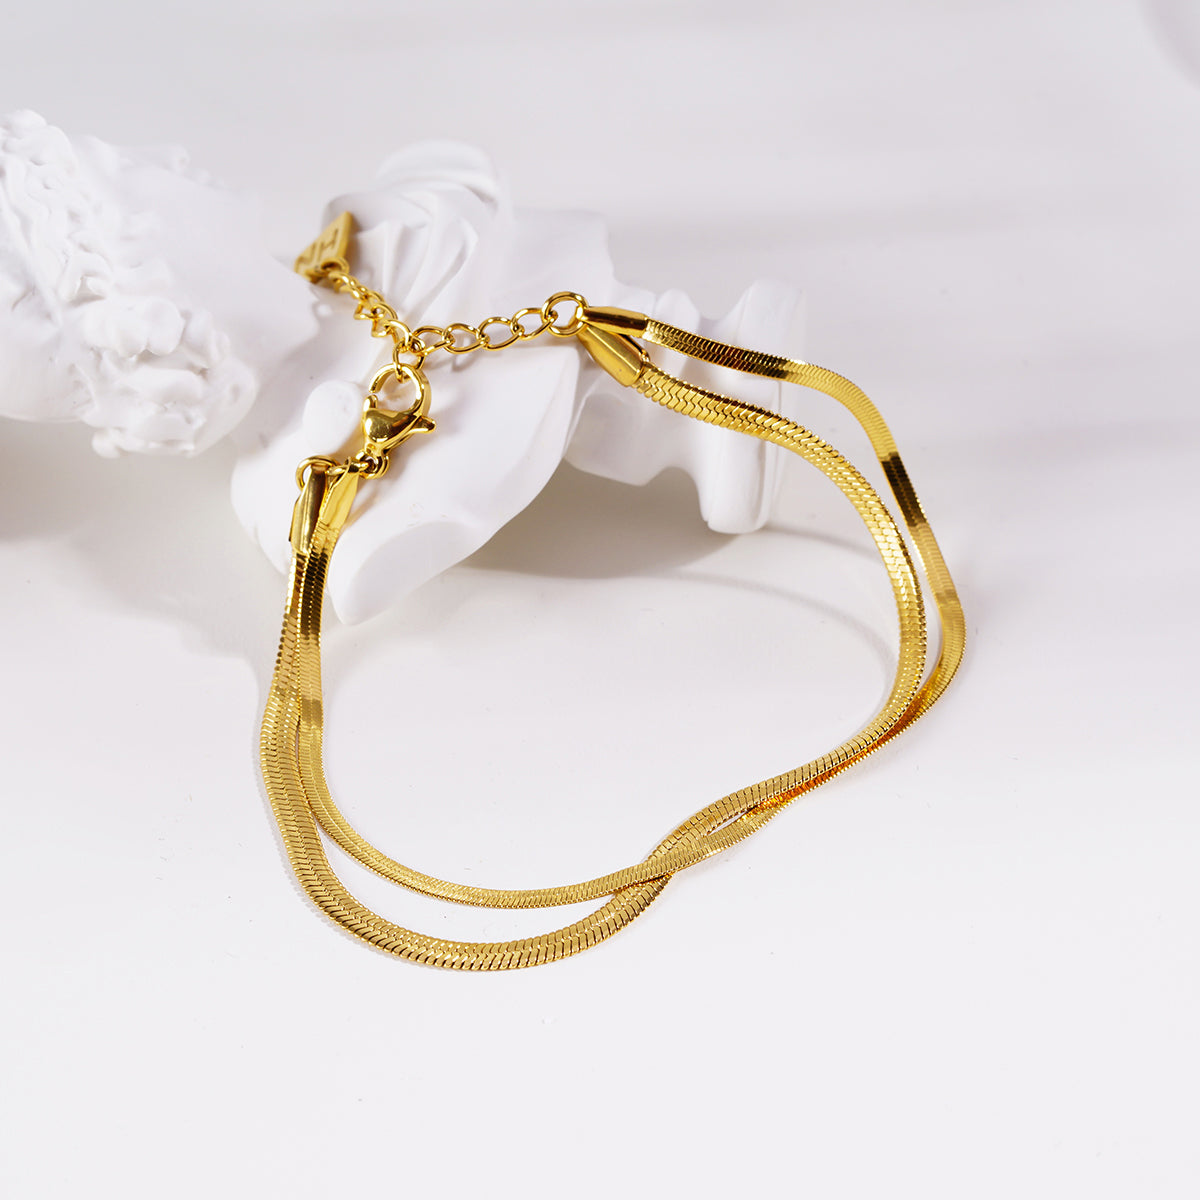 Style INESE 8616: Snake-Skin Textured 2-Layer Gold Bracelet.